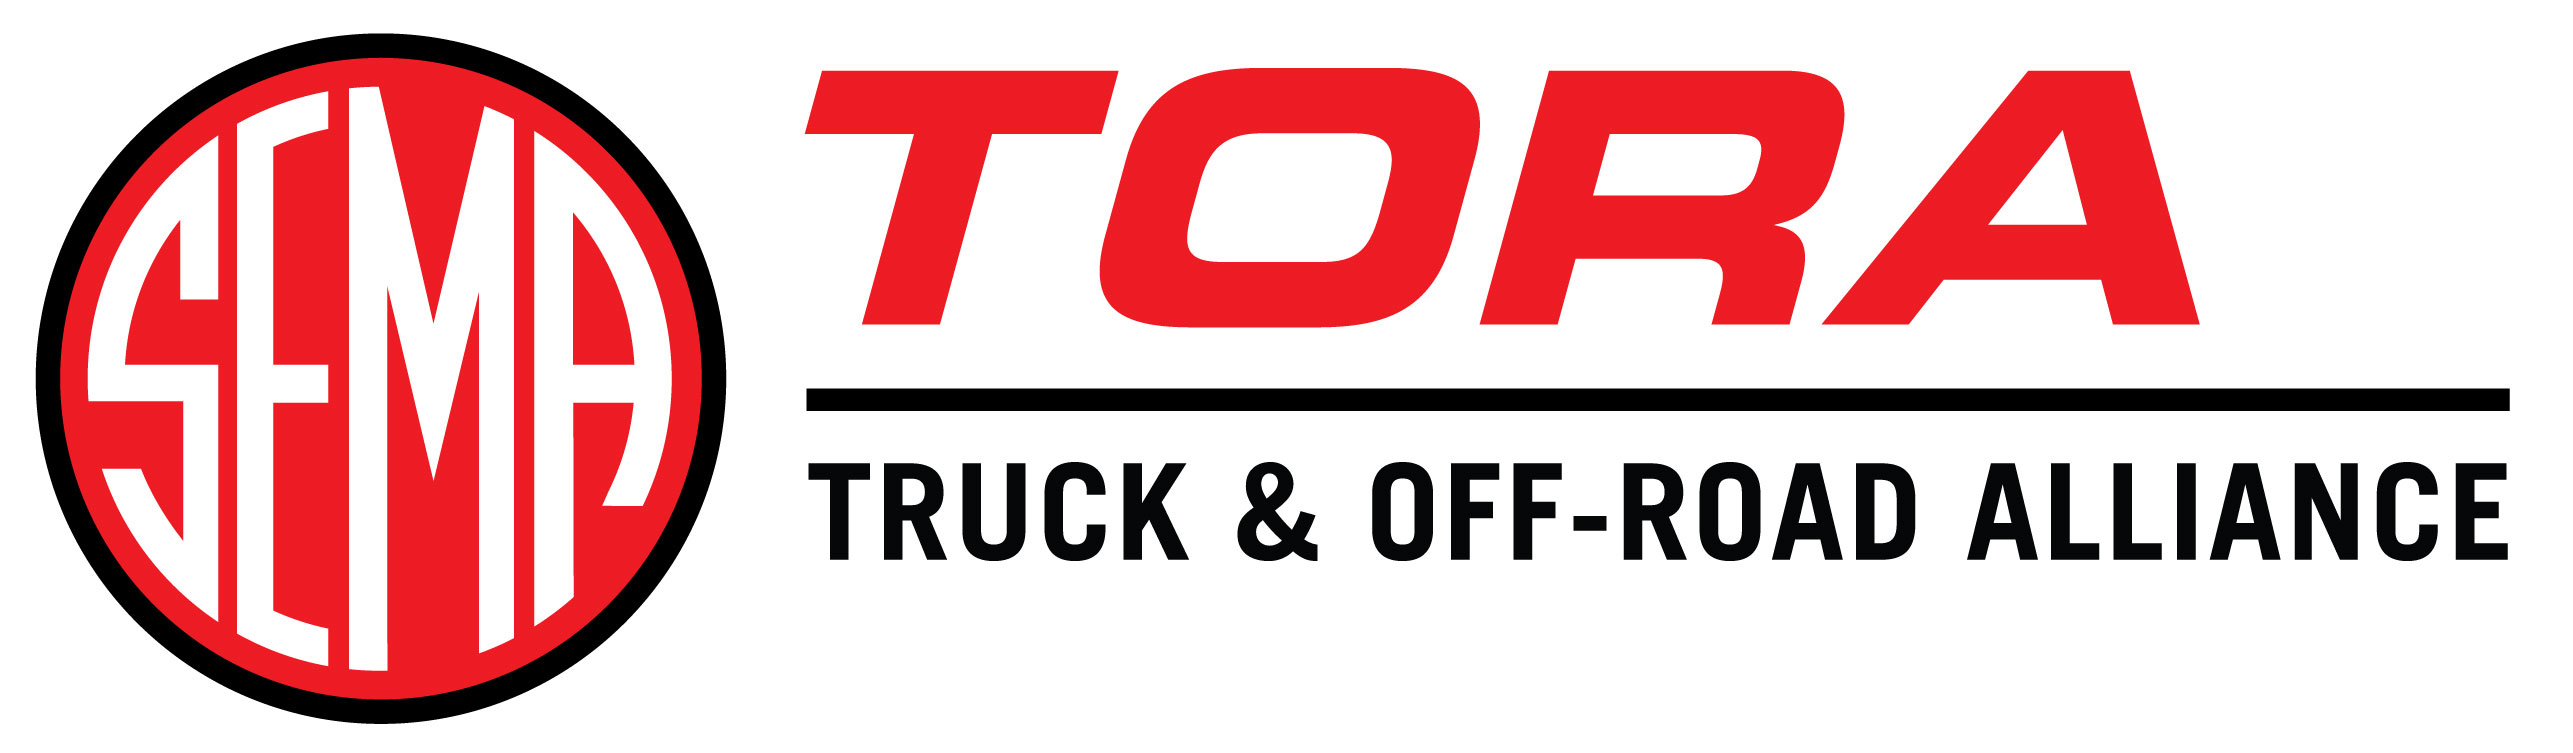 Truck & Off0Road Alliance (TORA) - logo